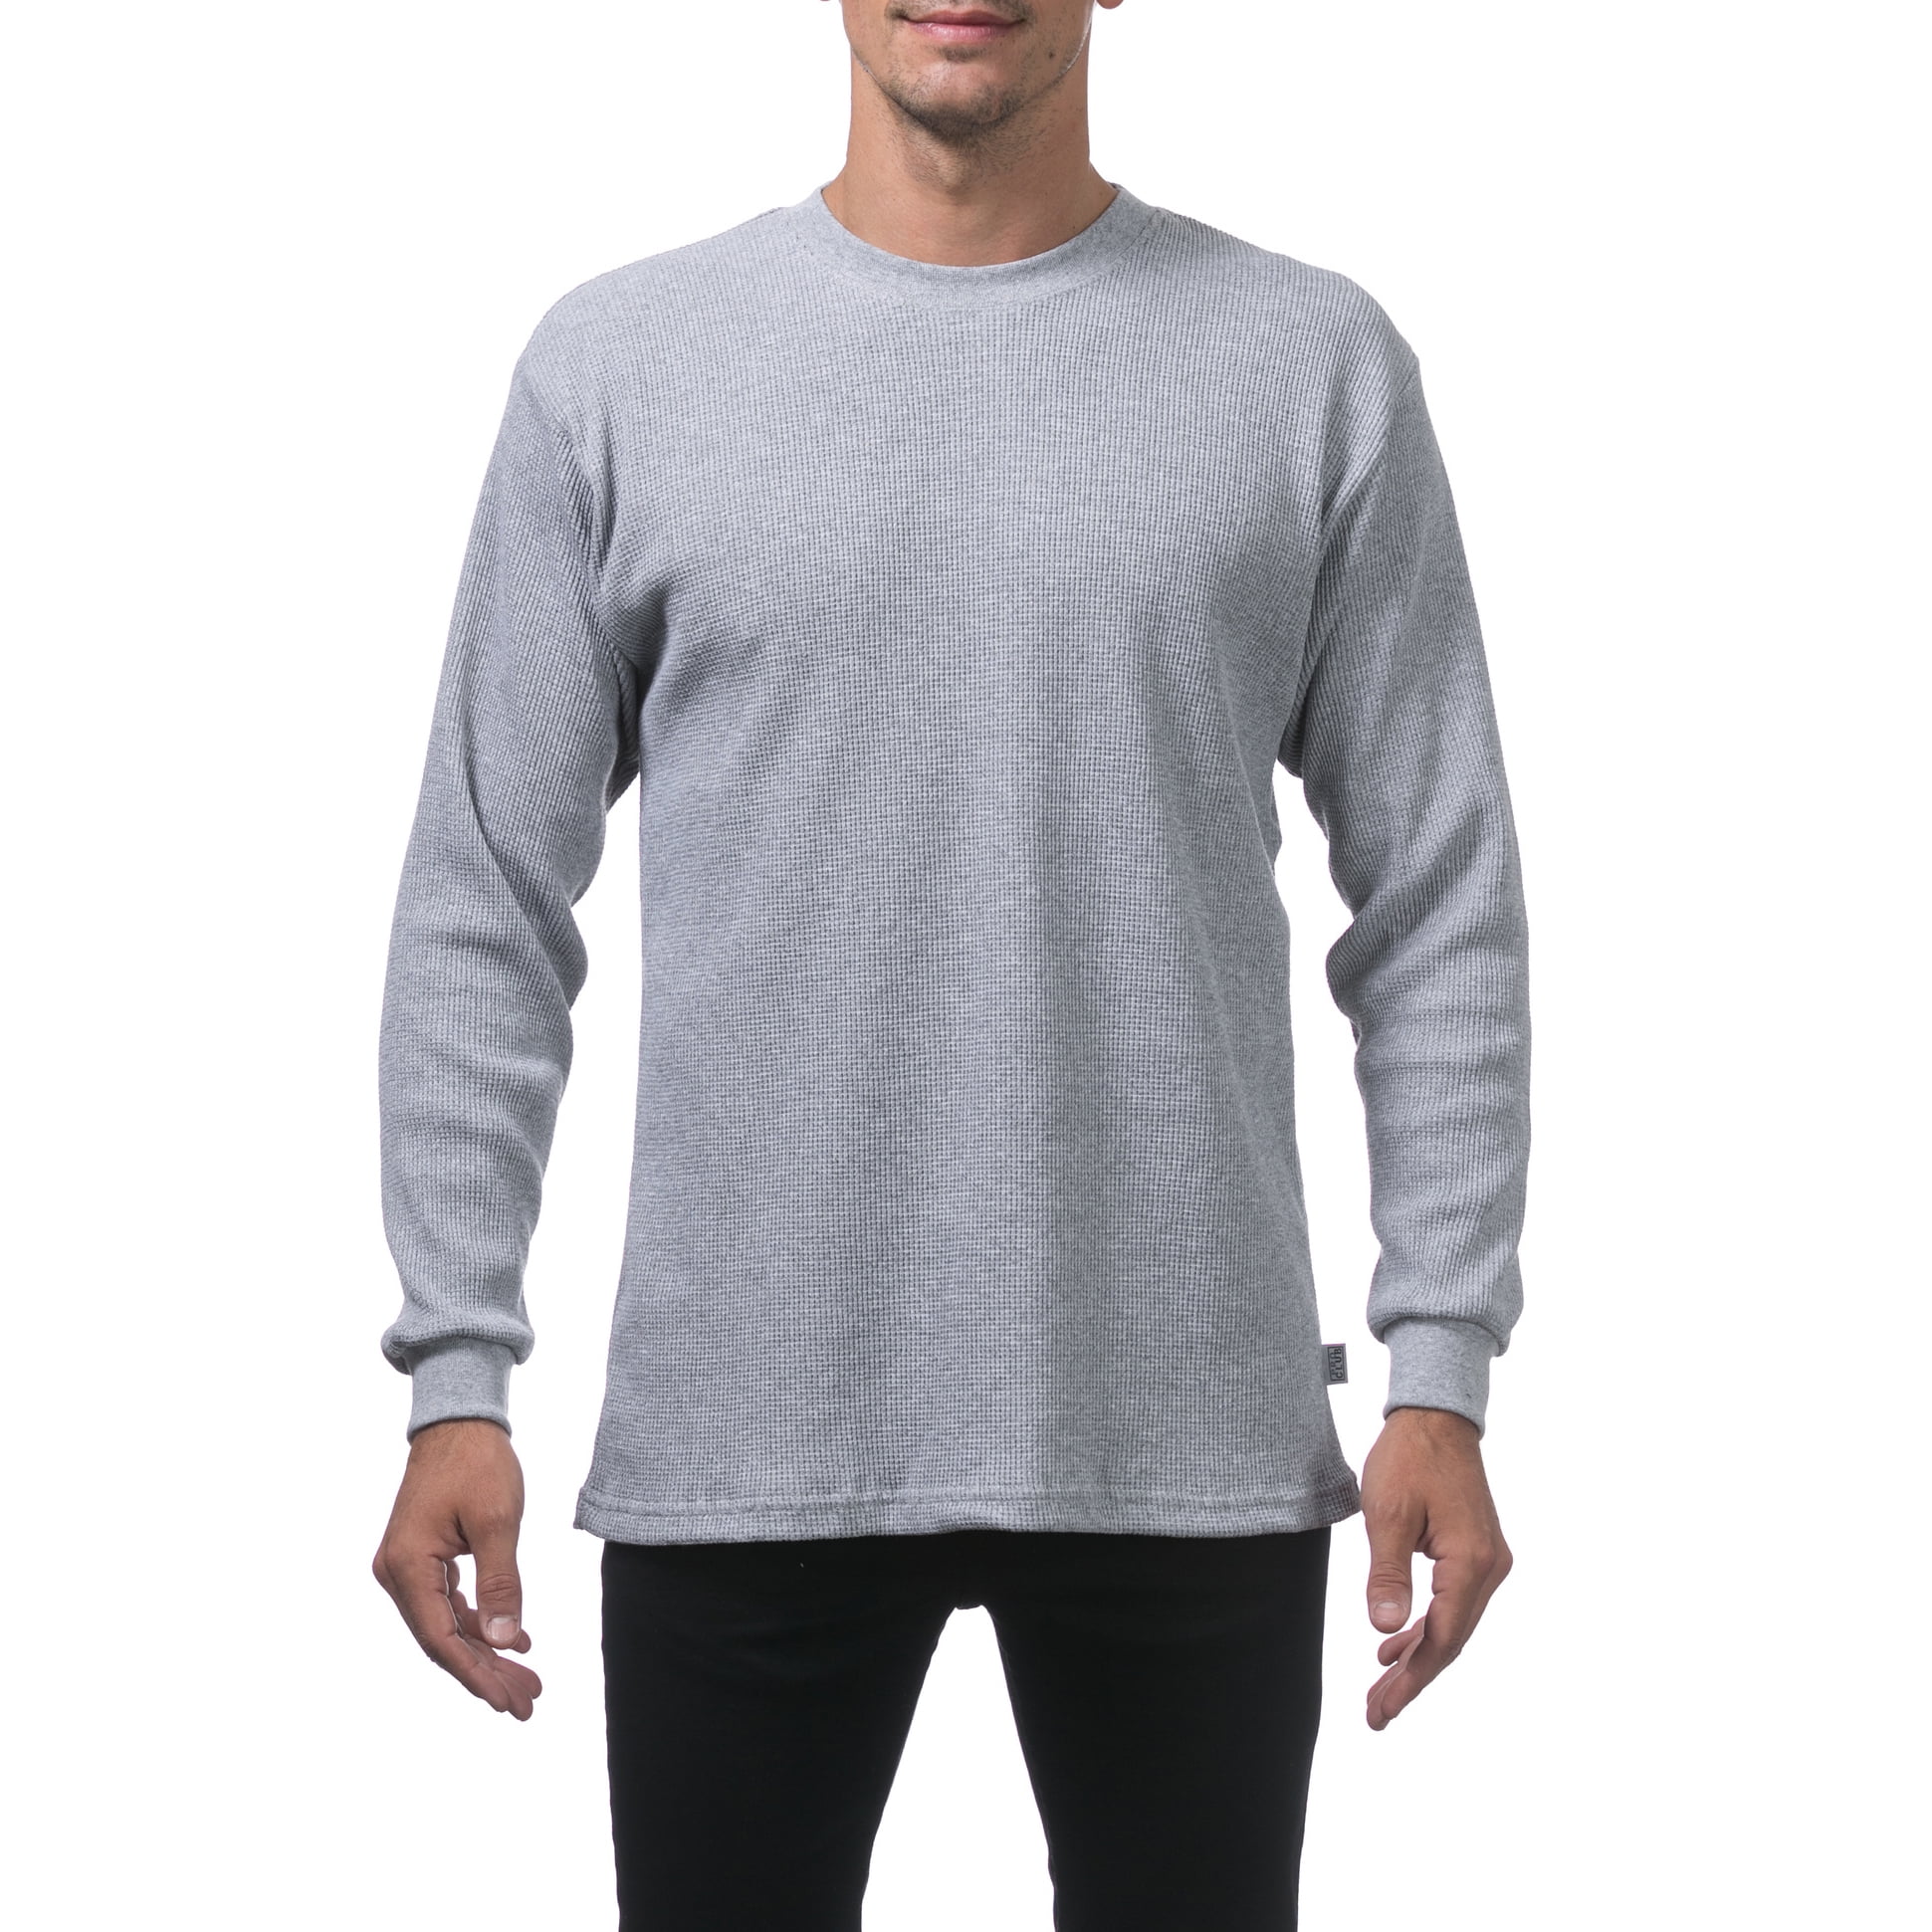 Pro Club Men's Heavyweight Cotton Long Sleeve Thermal Shirt - City Camo -  Extra Large